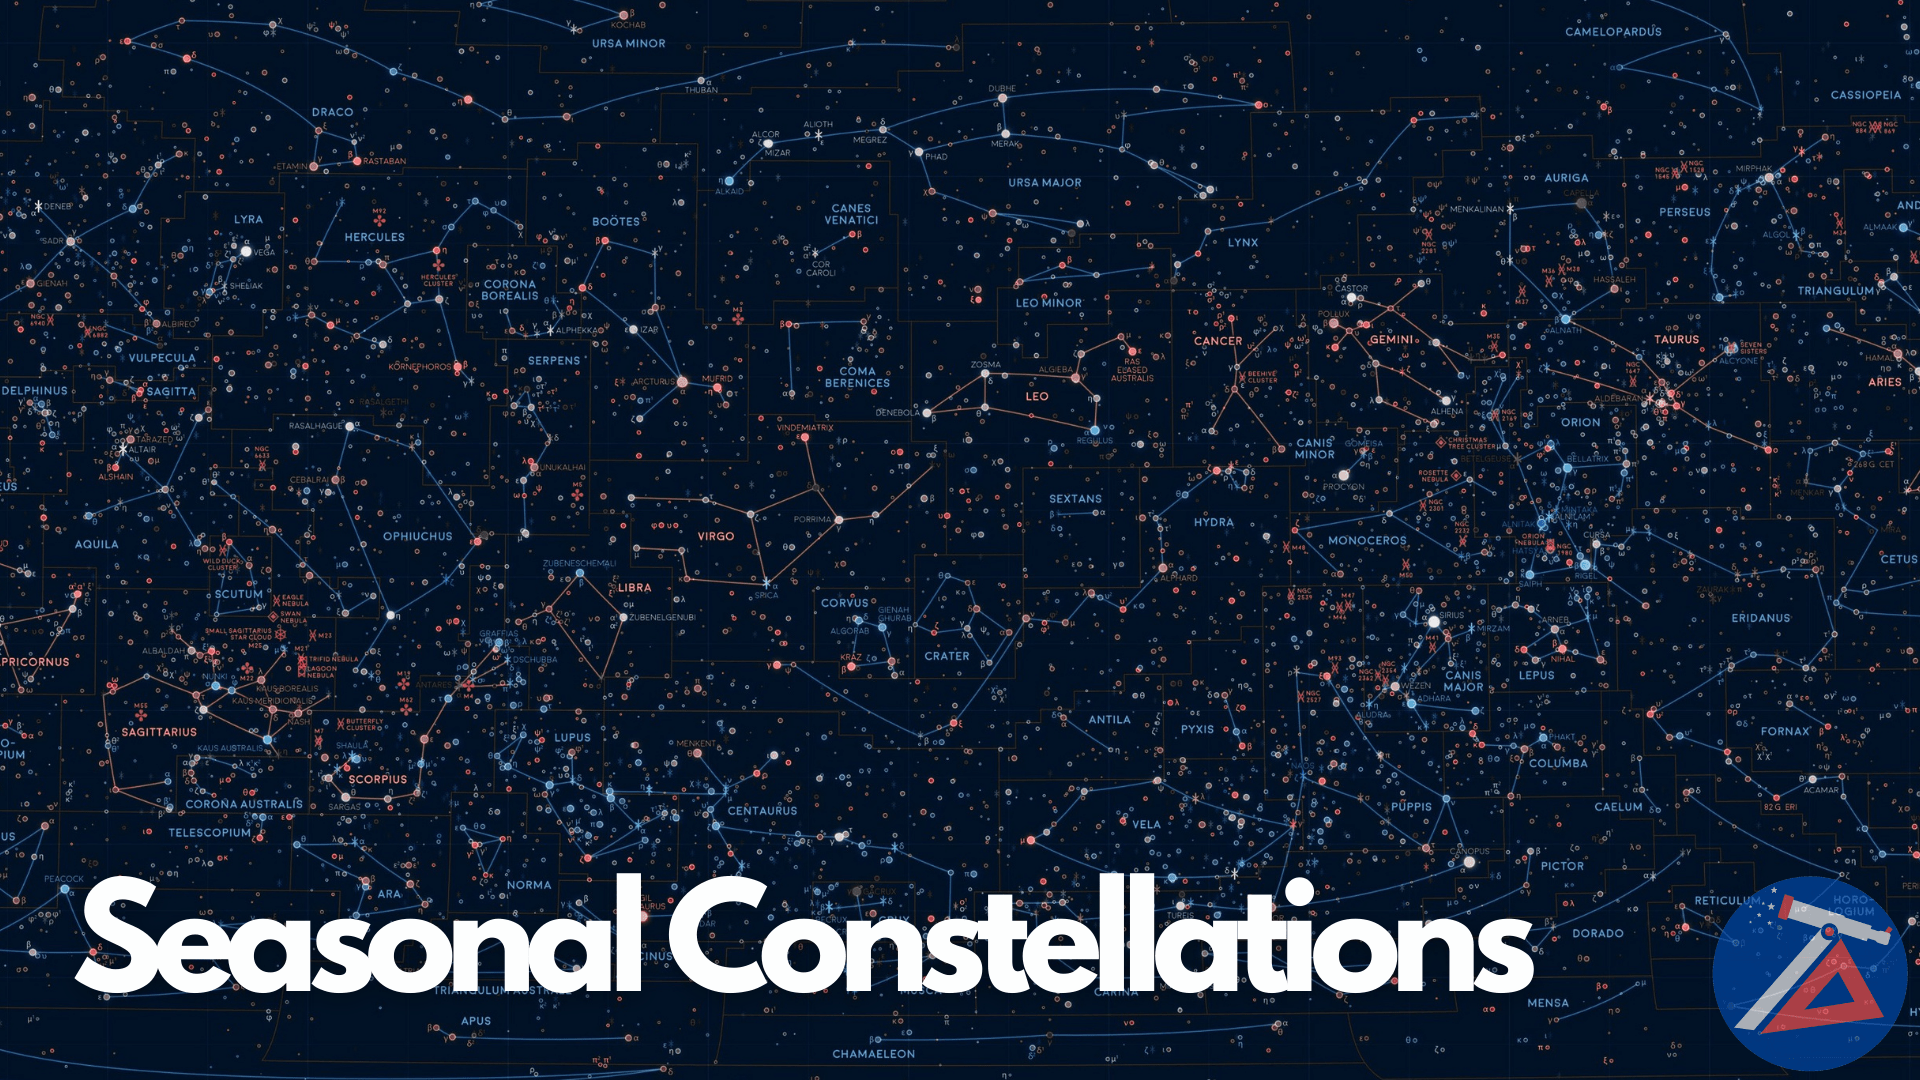 Seasonal Constellations Overview